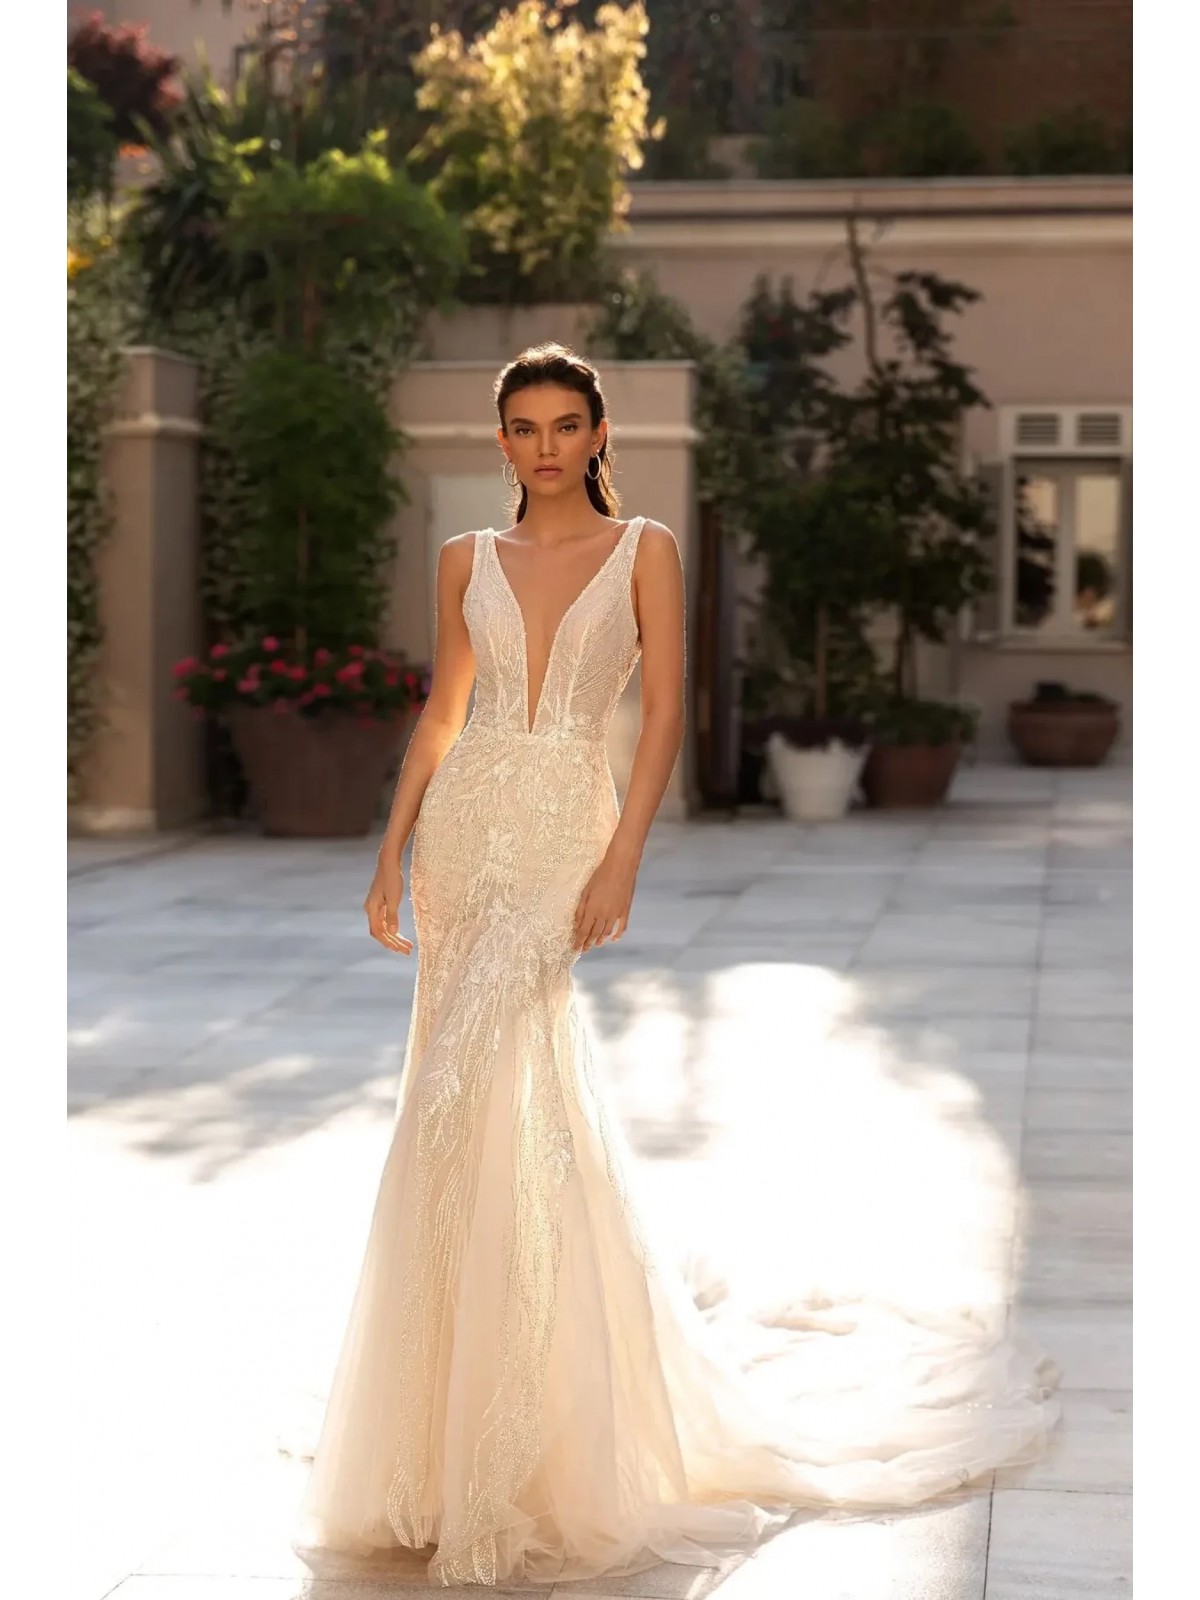 Wedding Dress - Delighta - LIDA-01243.00.17